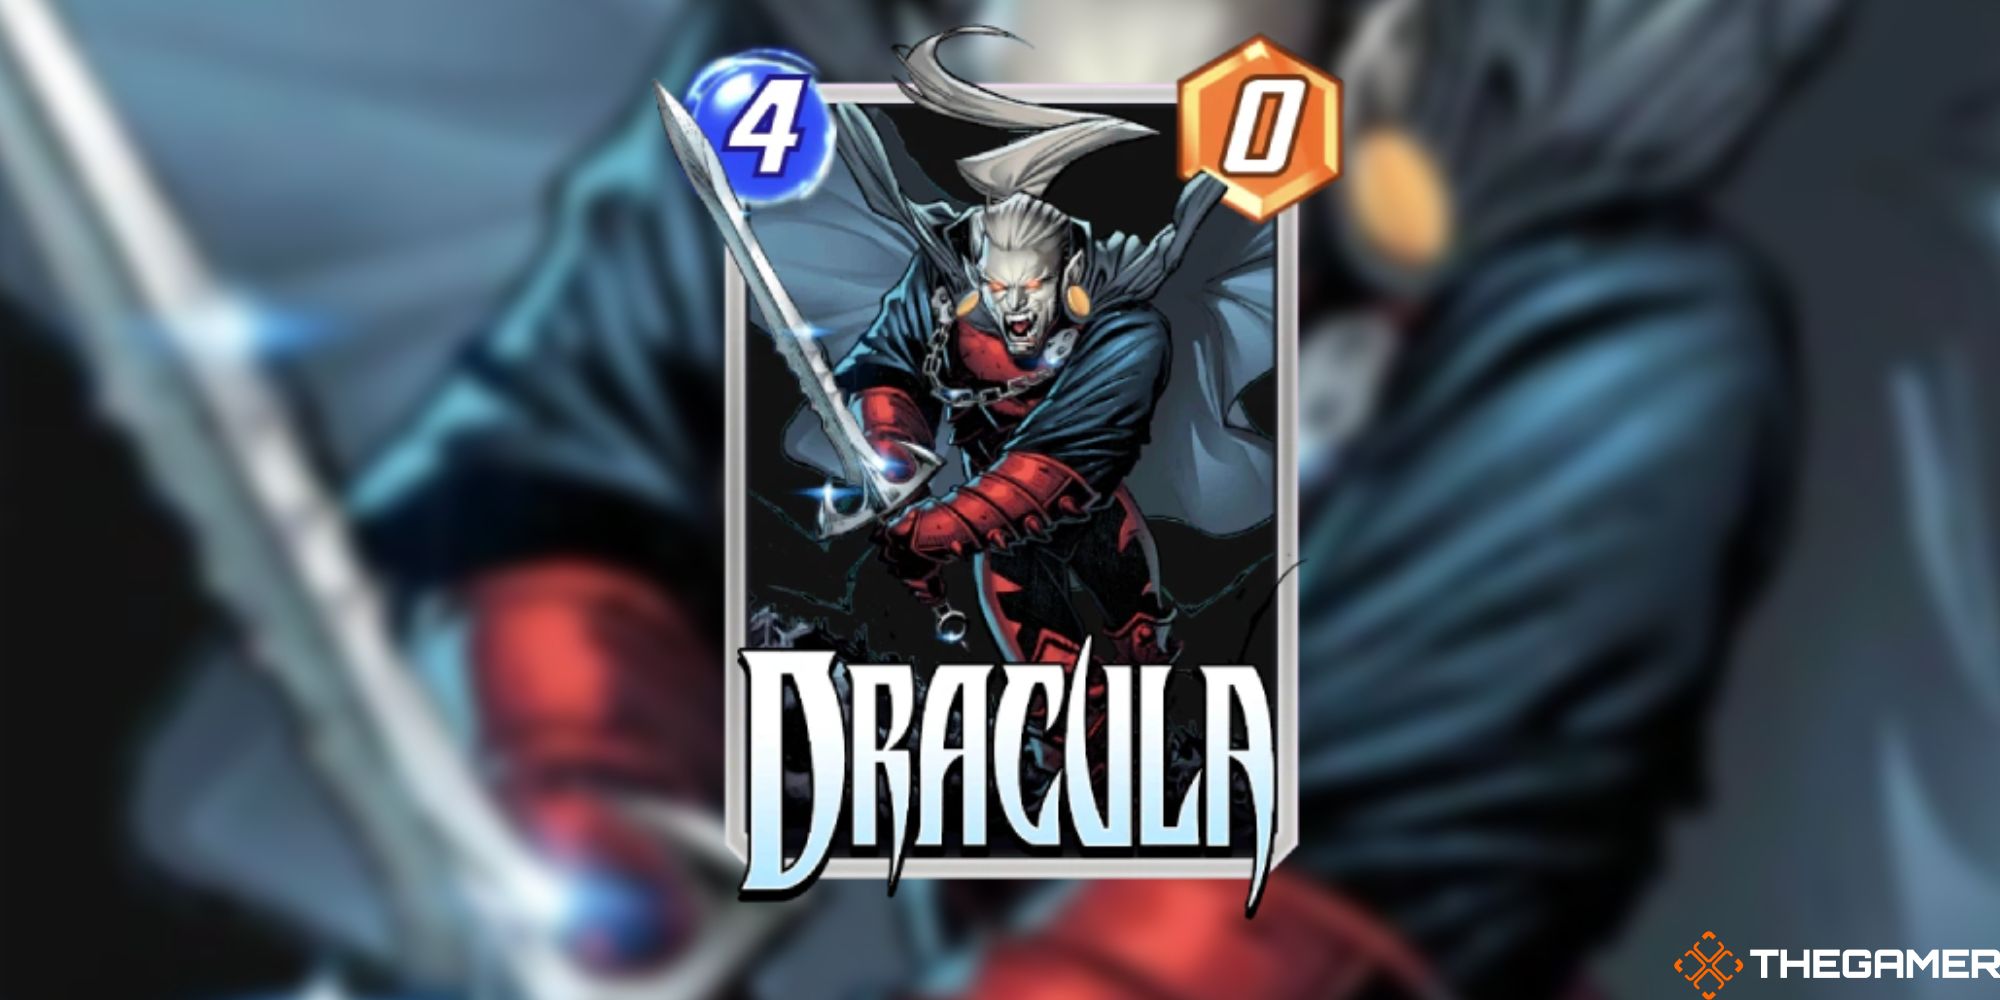 Card art of Dracula by Ryan Kinnaird and Combo Break from Marvel Snap